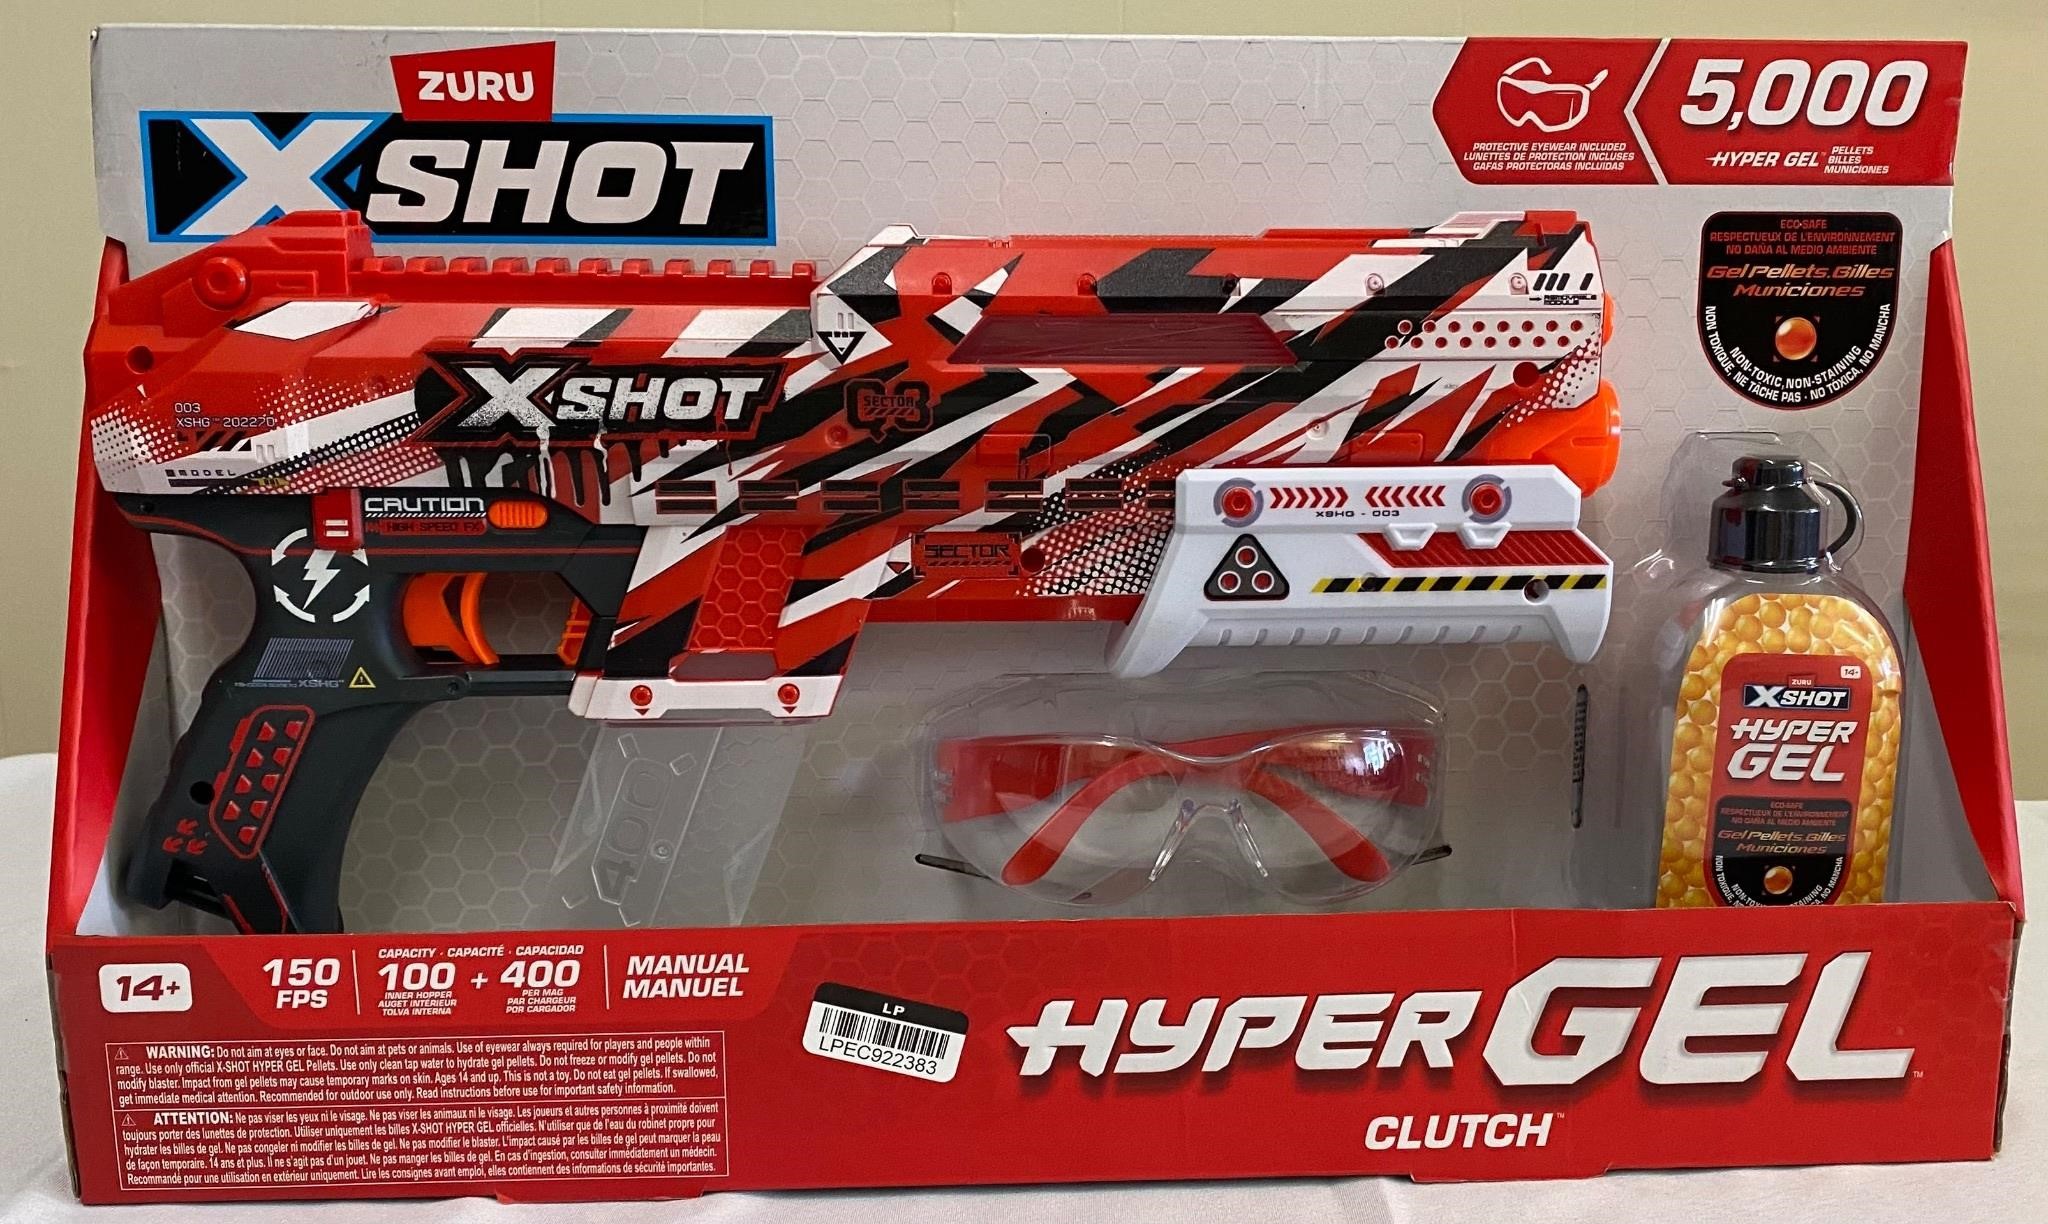 BRAND NEW Zuru X Shot Hyper Gel Clutch